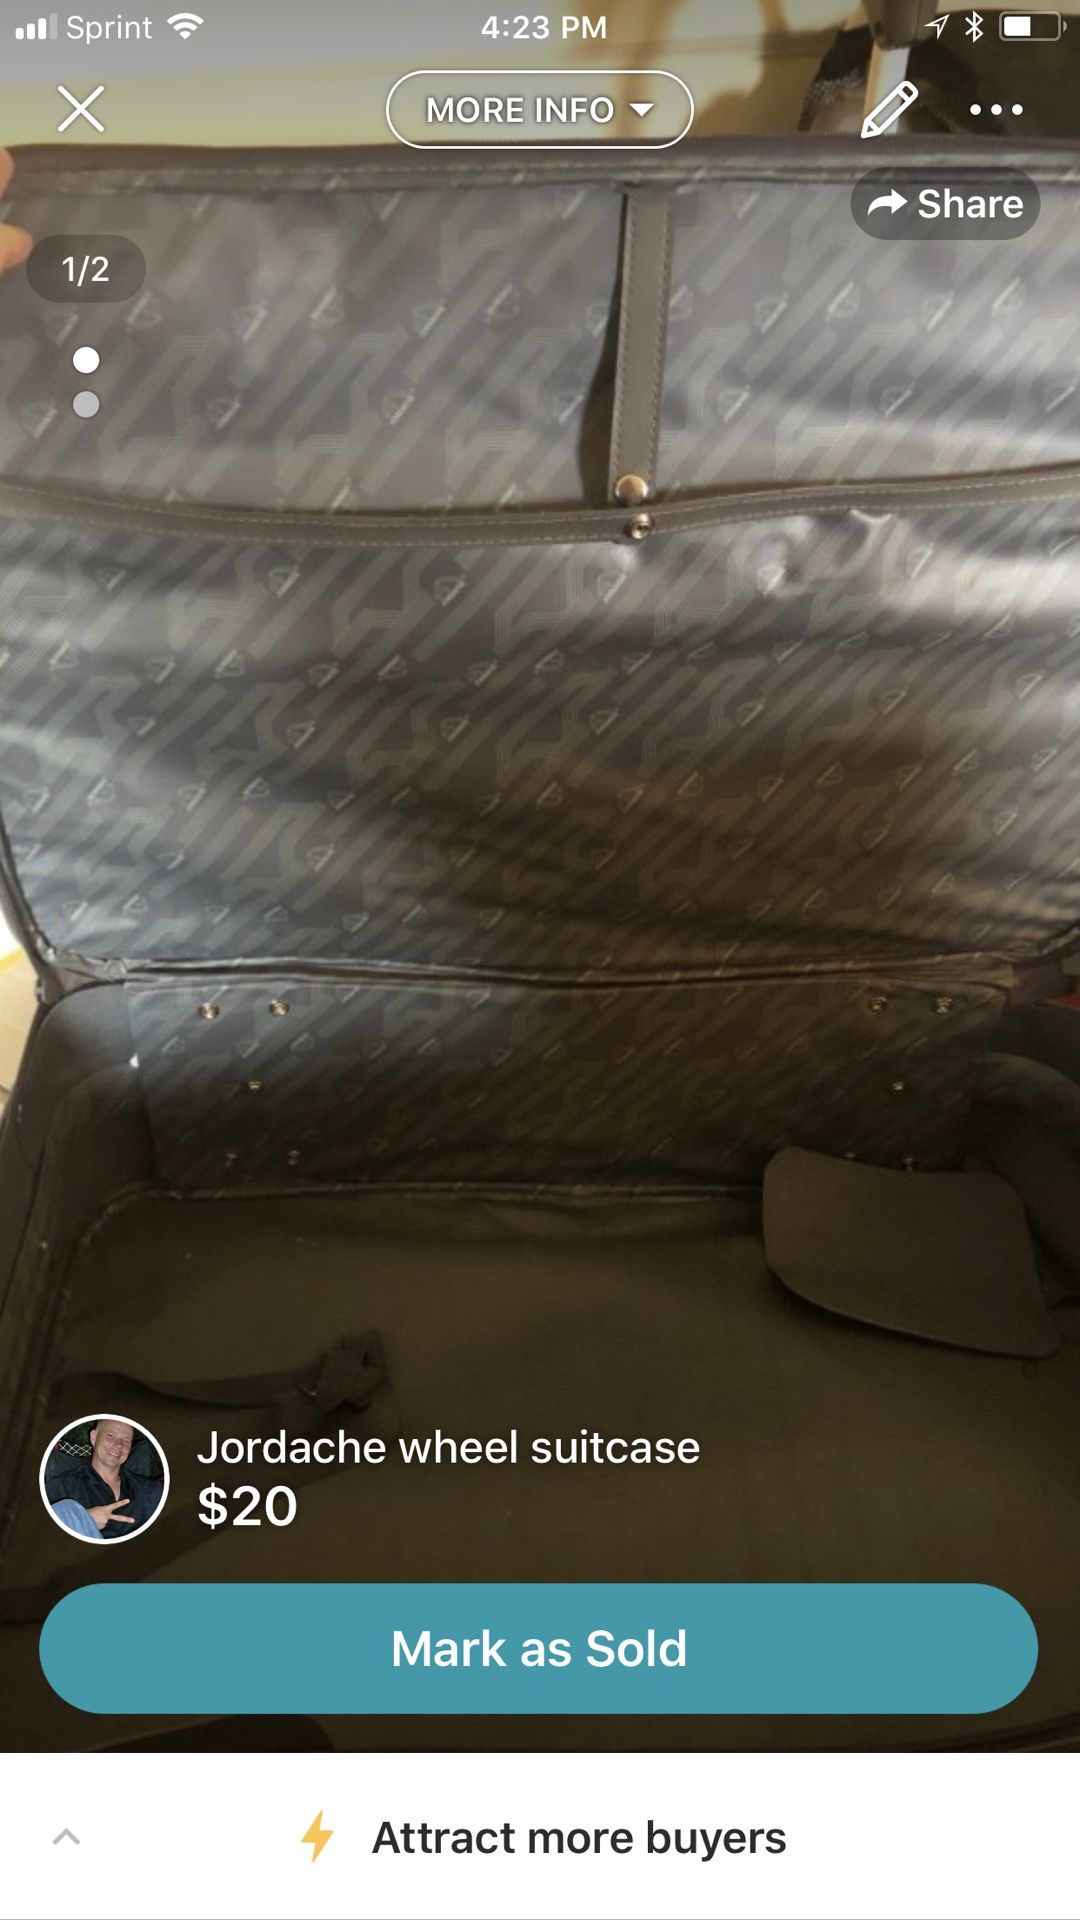 Jordache wheel suitcase